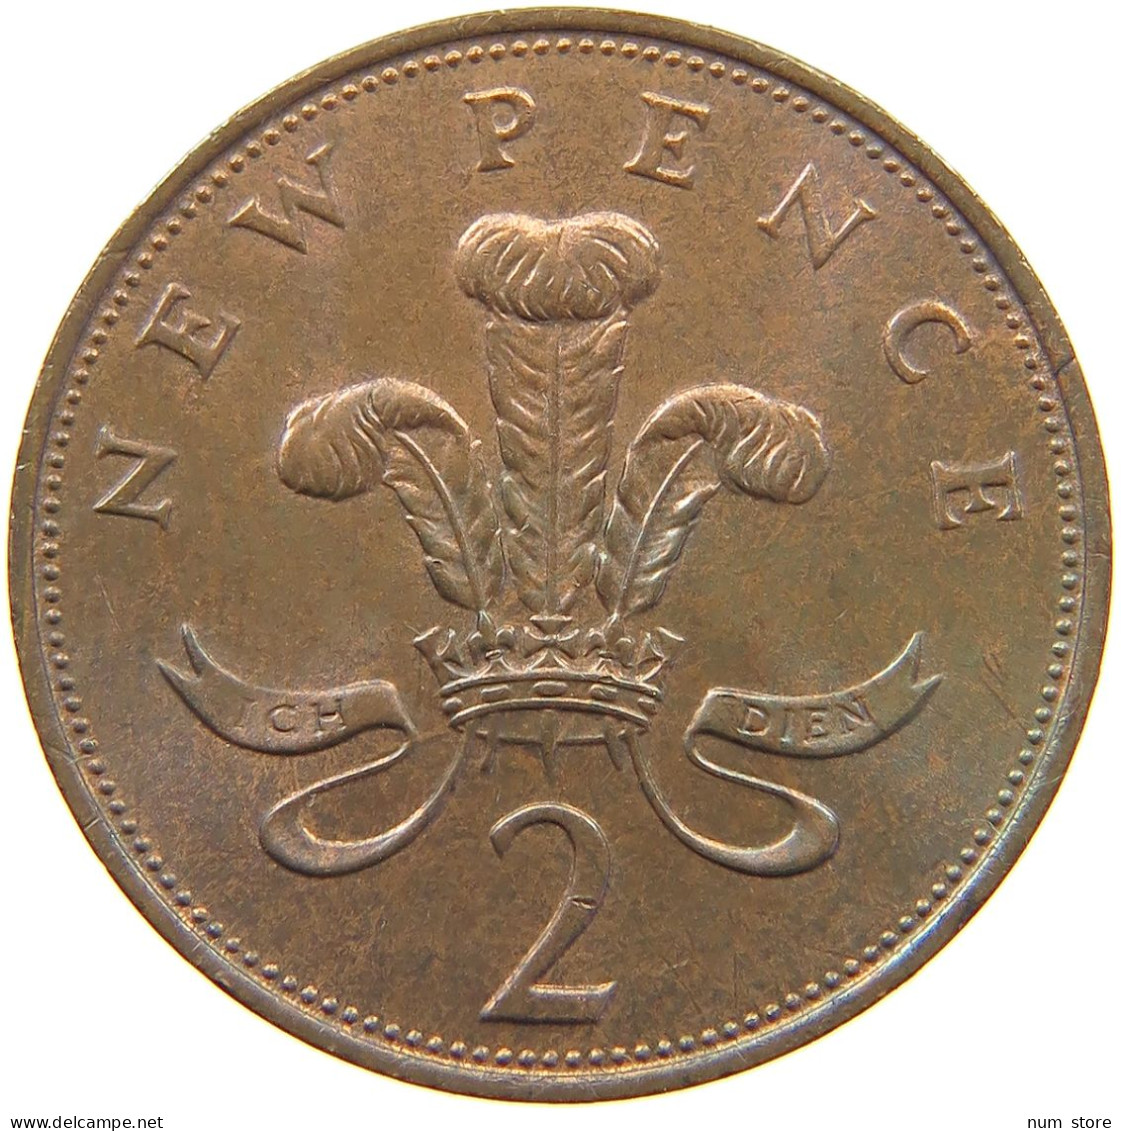 GREAT BRITAIN 2 PENCE 1971 Elisabeth II. (1952-) #s060 0719 - E. 2 Pence